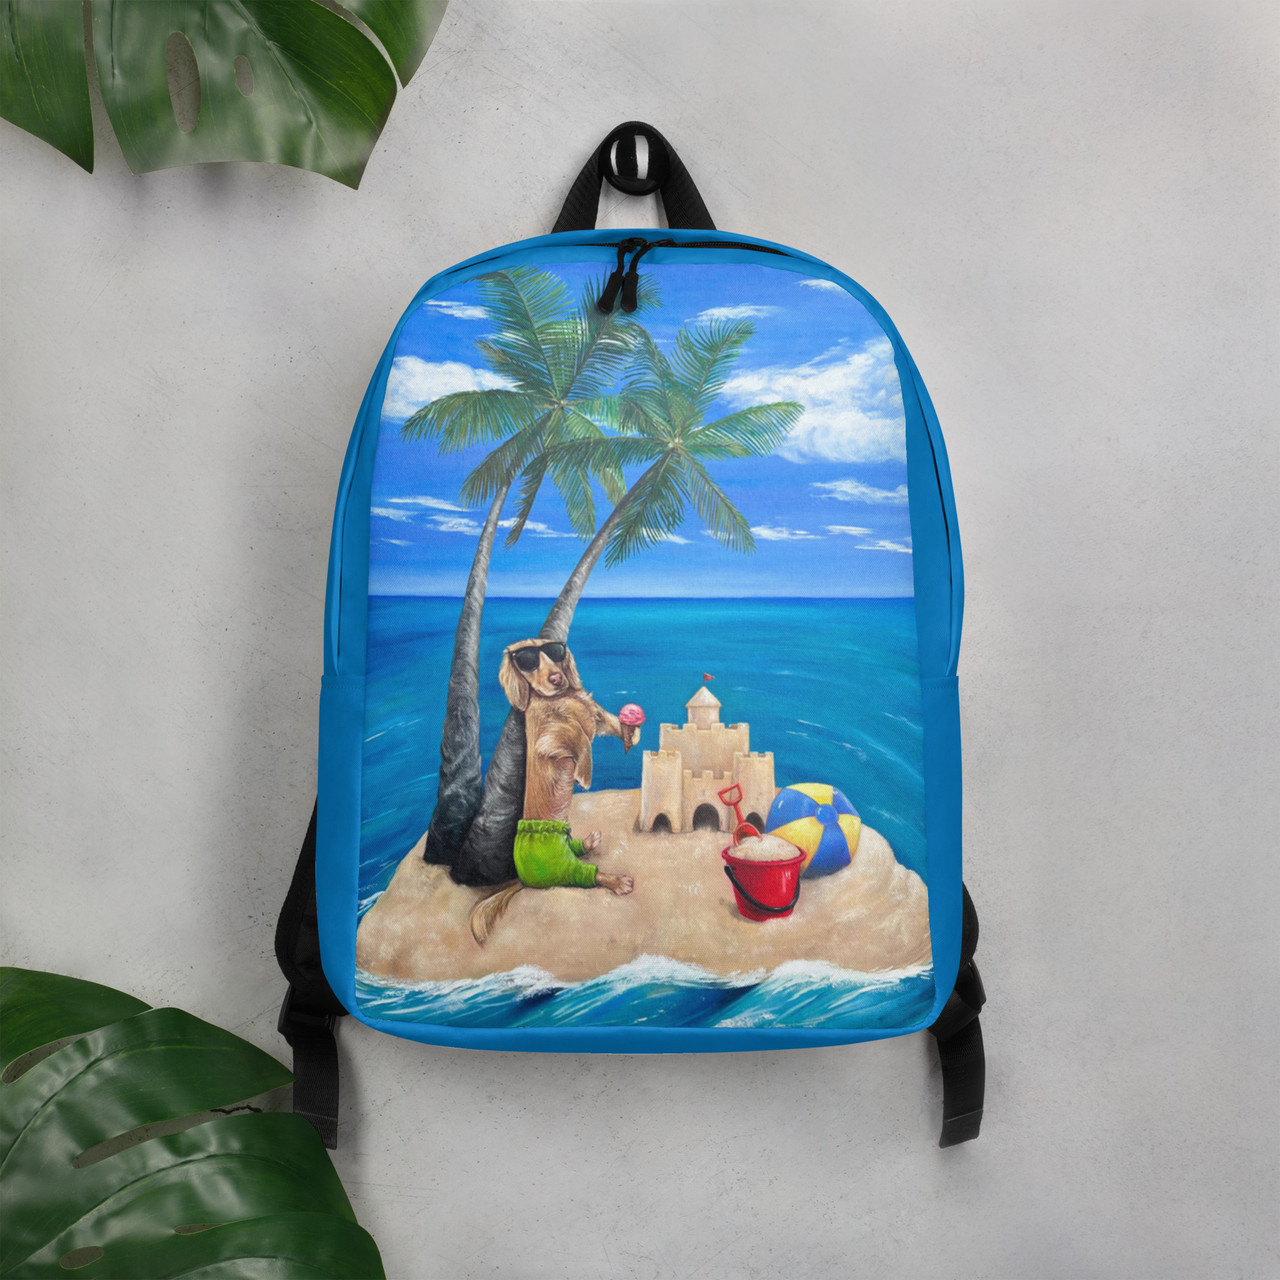 Macaboy's Beach Adventure Backpack